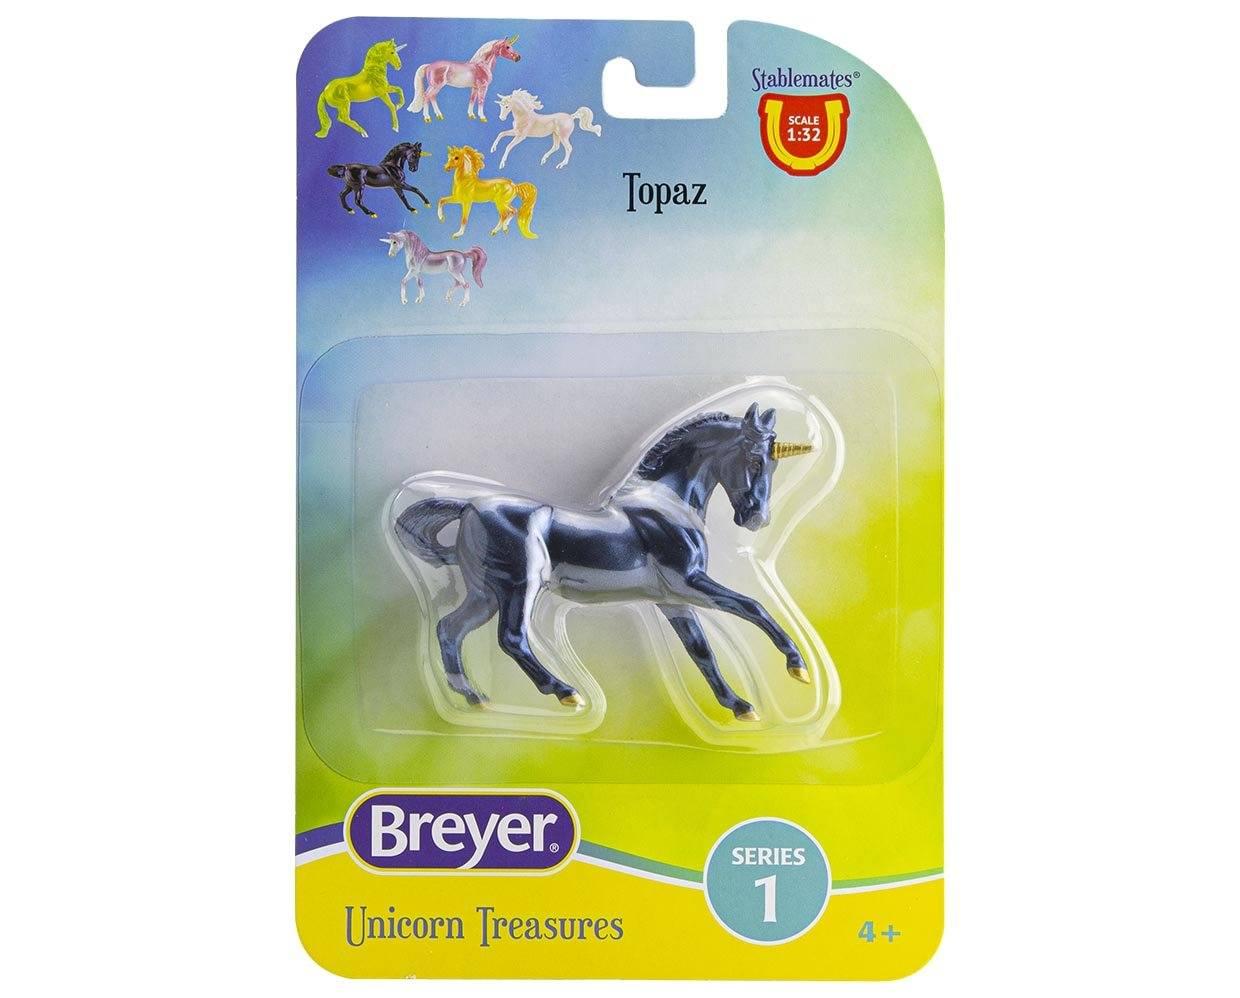 Breyer Unicorn Treasures 1:32 Scale Model Horse | Topaz